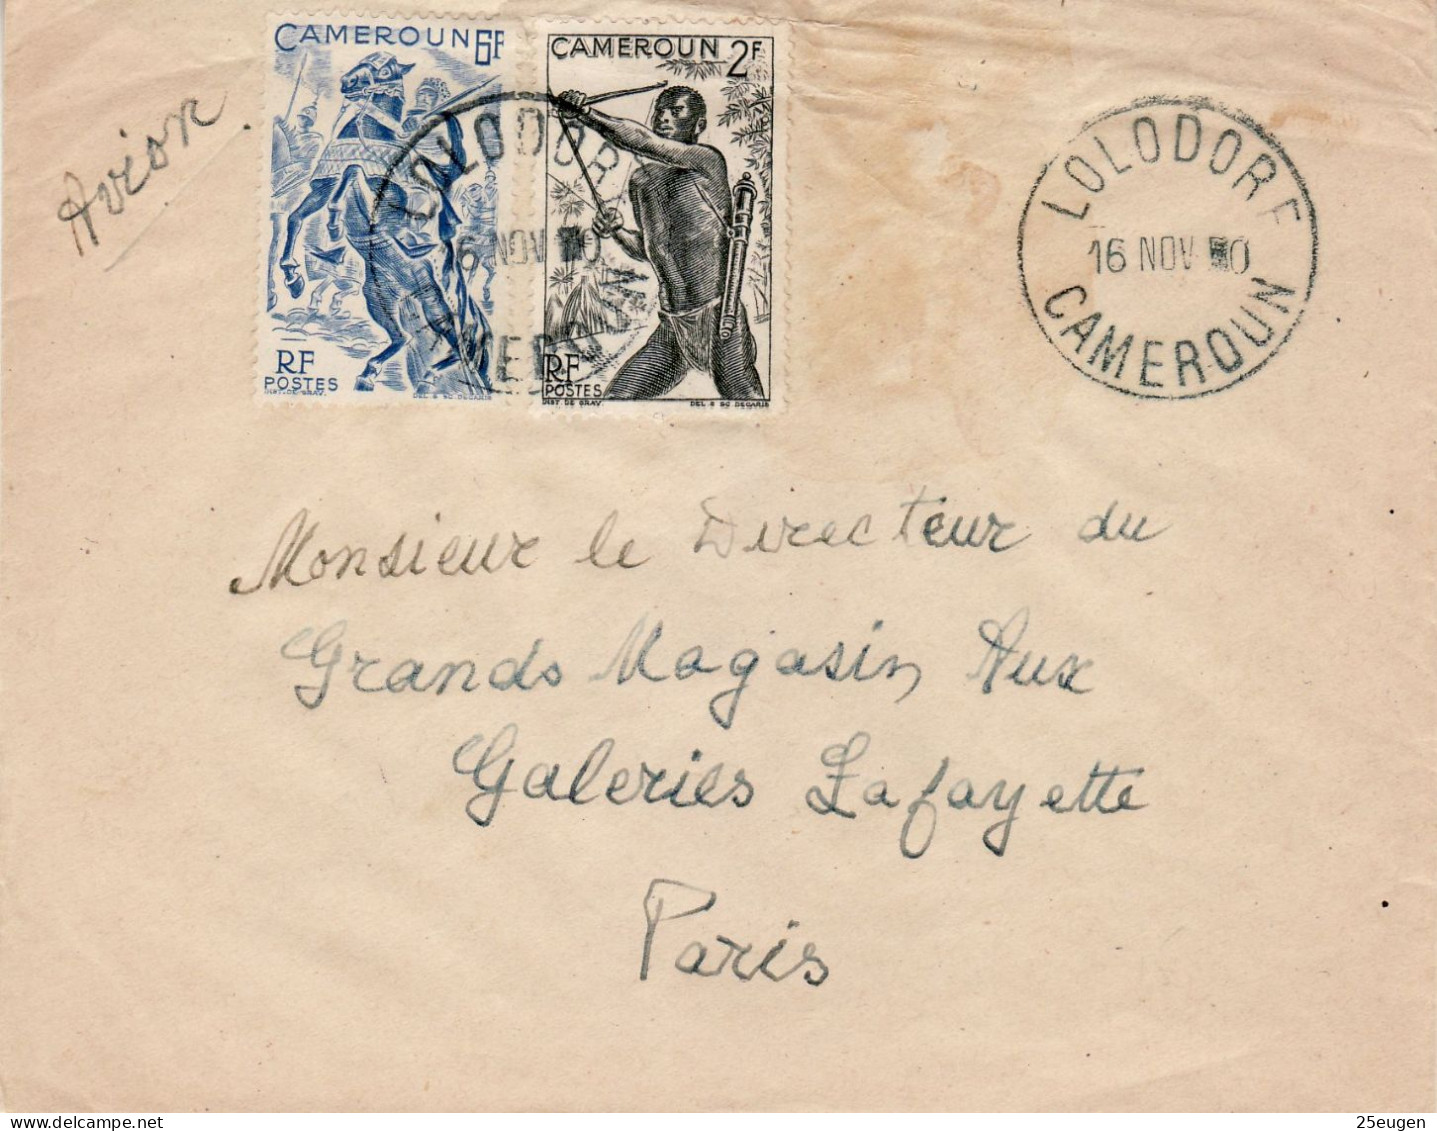 CAMEROUN 1950 AIRMAIL LETTER SENT FROM LOLODORE TO PARIS - Brieven En Documenten